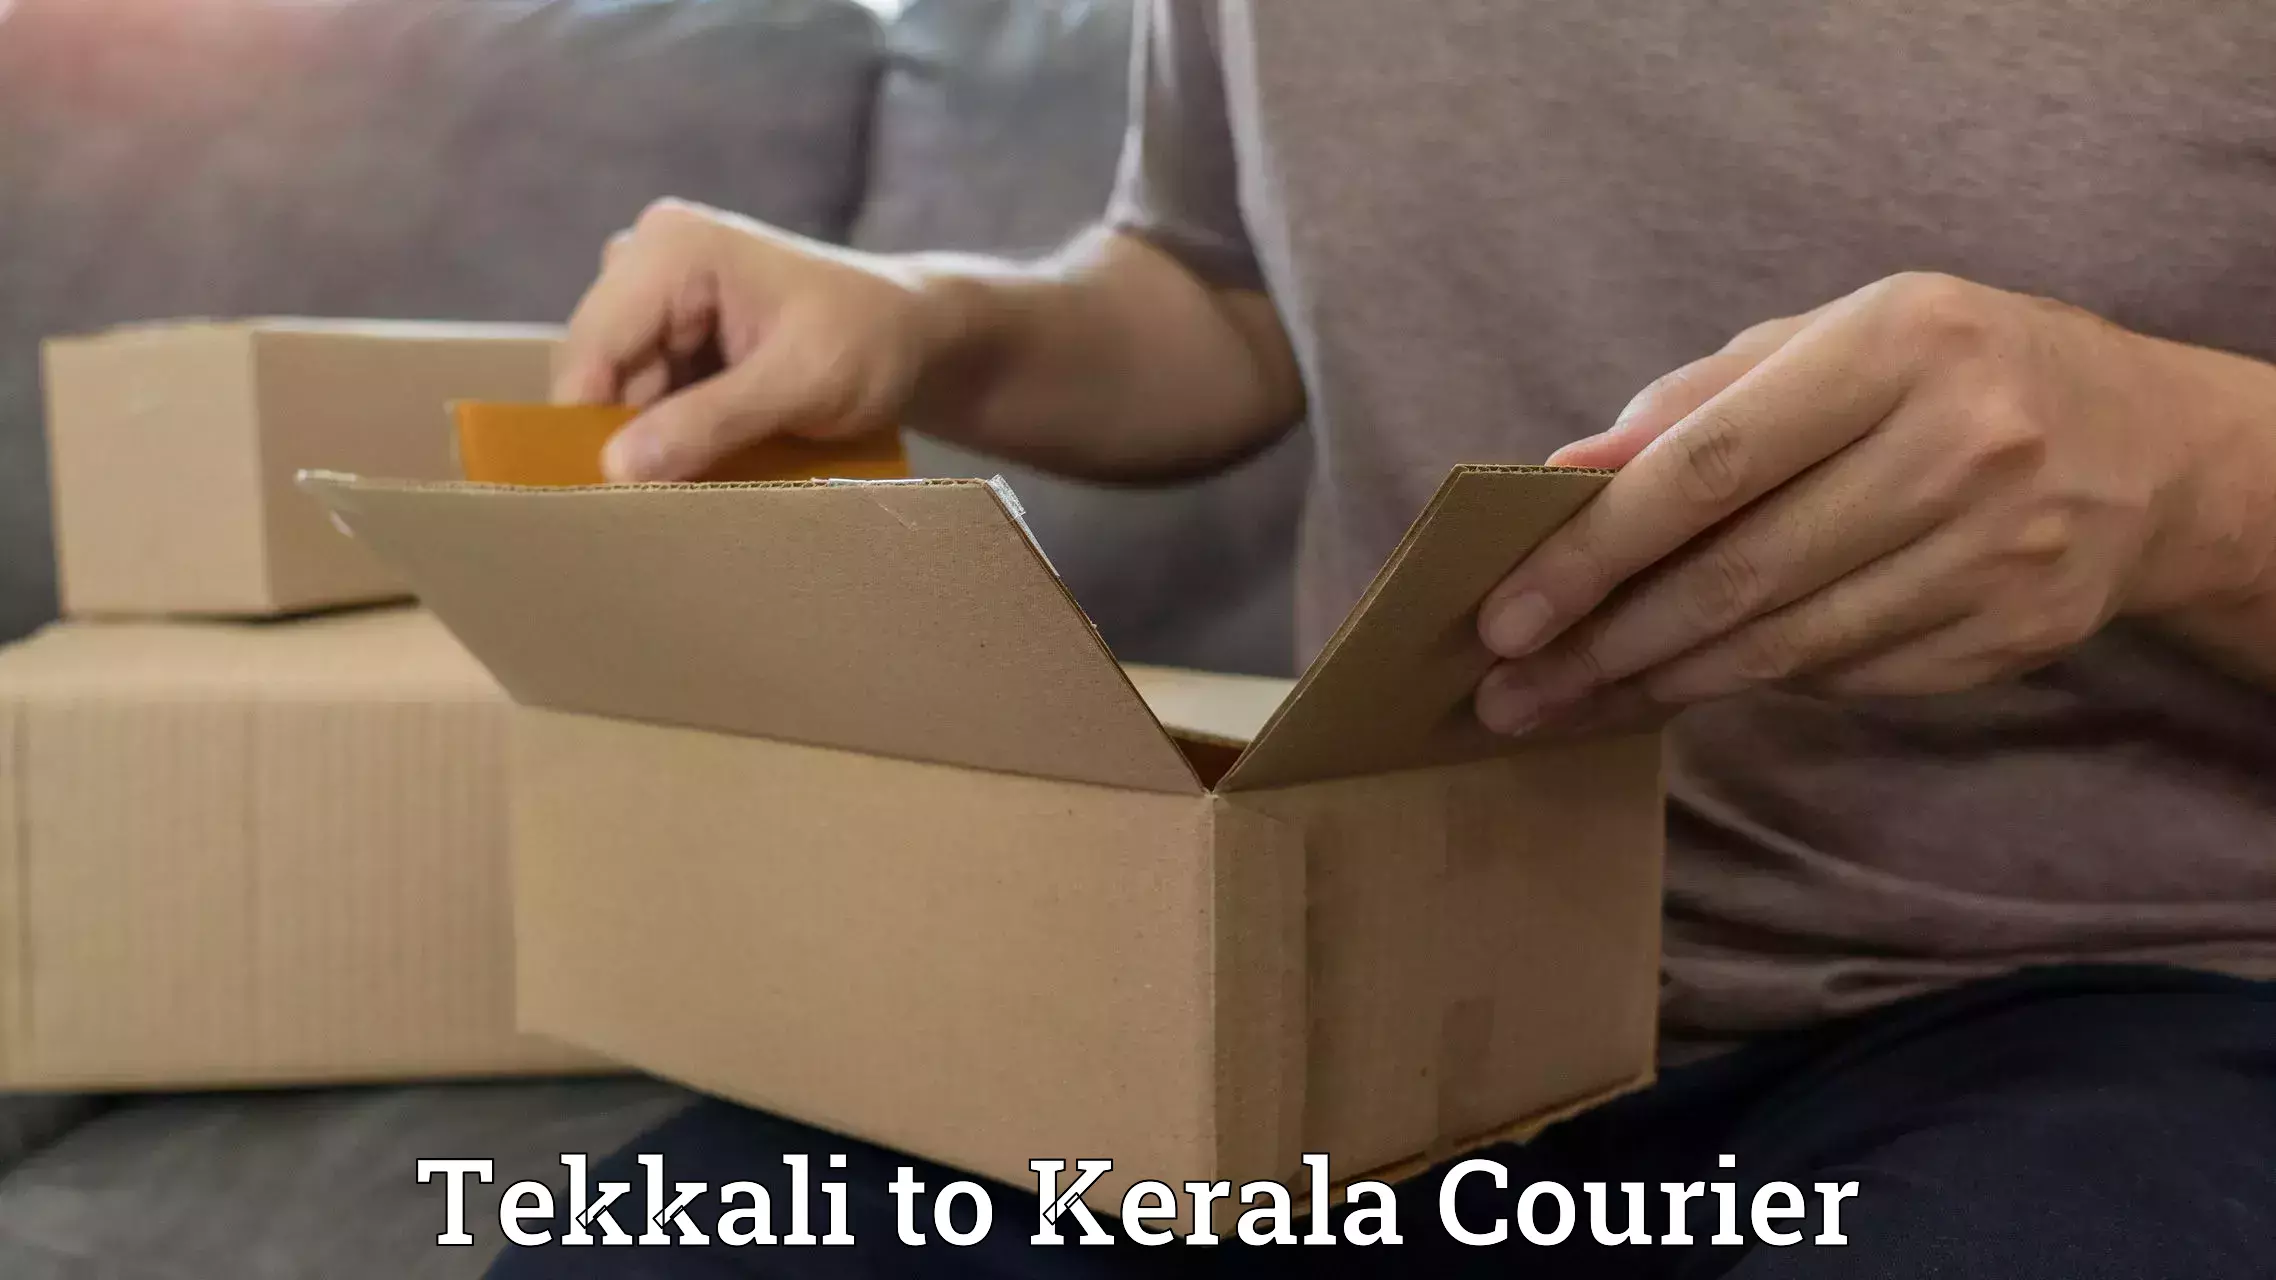 International parcel service Tekkali to Kerala